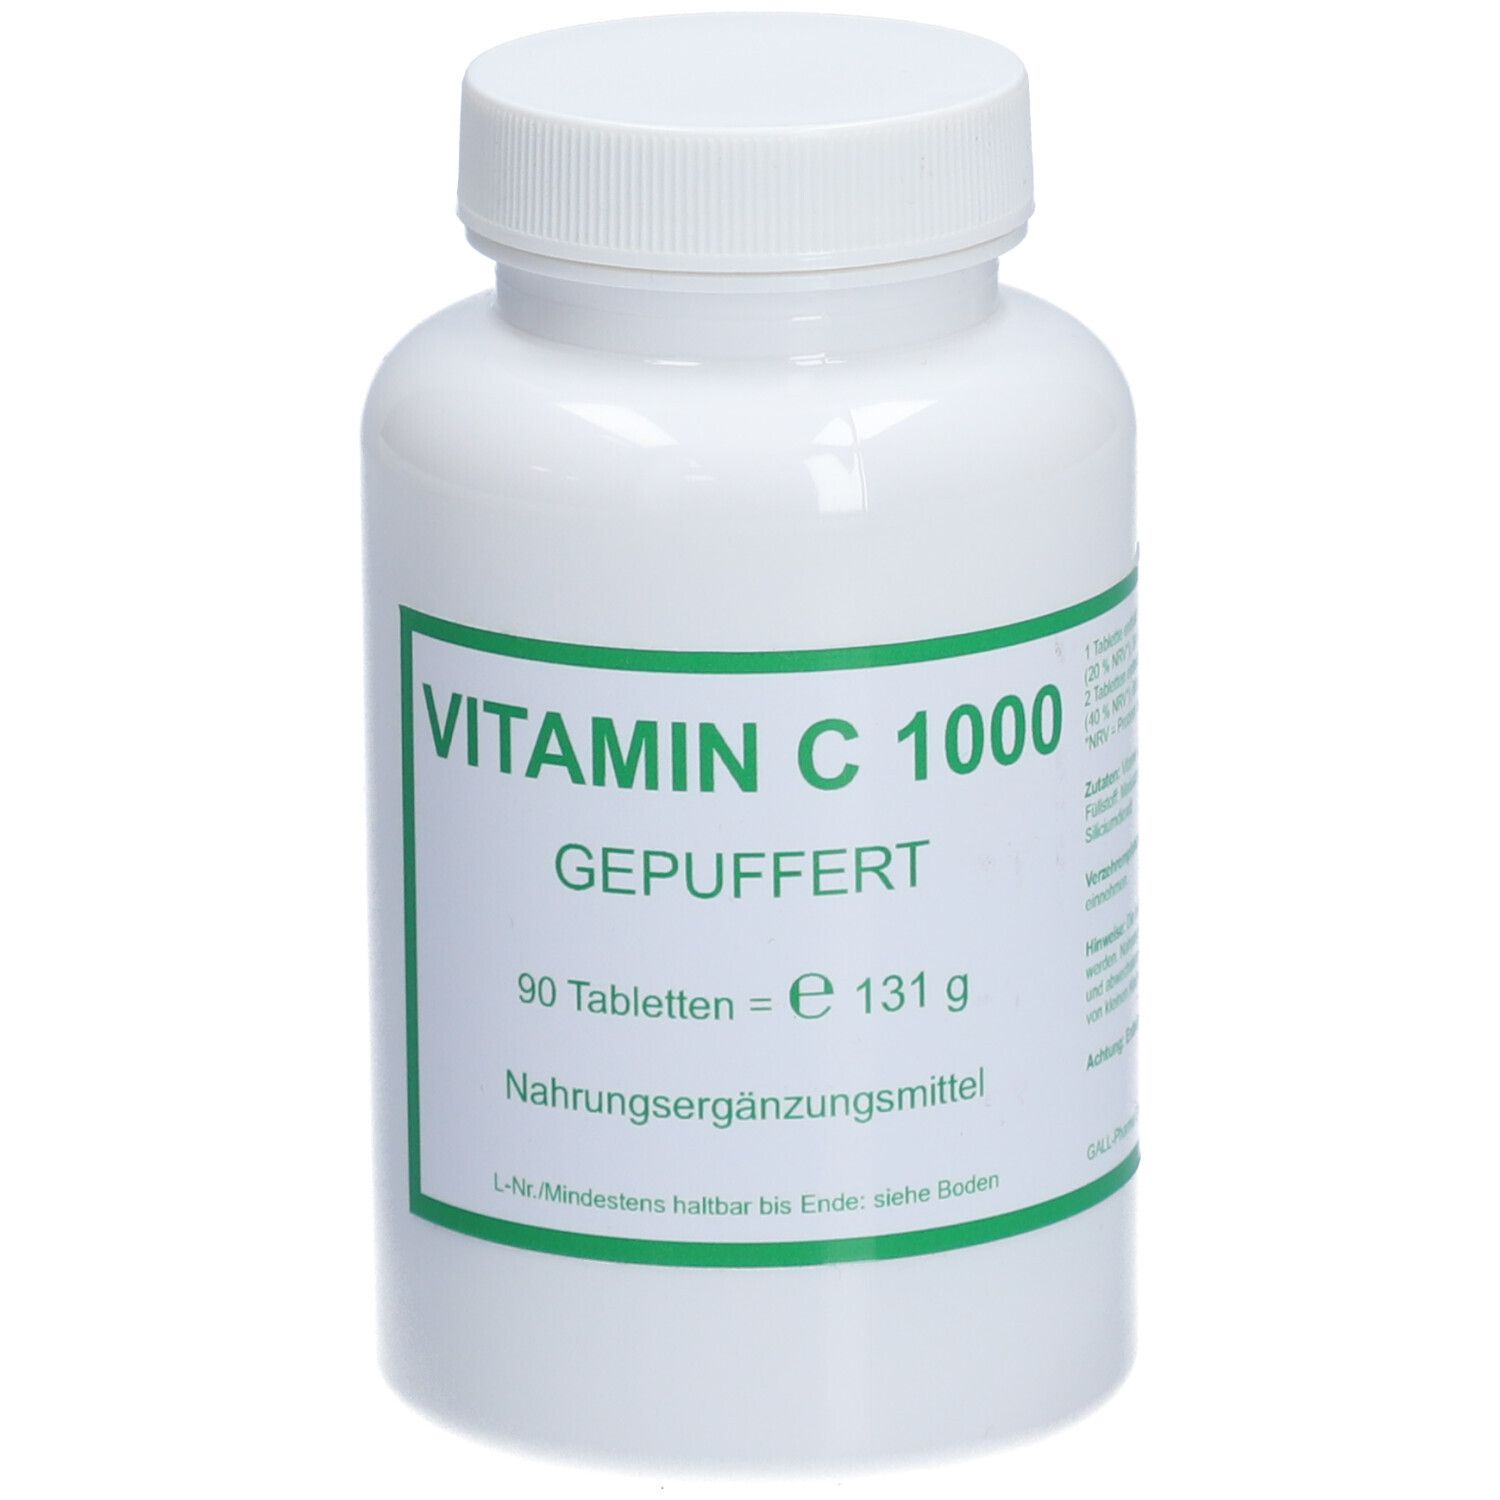 VITAMIN C 1000 gepuffert Tabletten